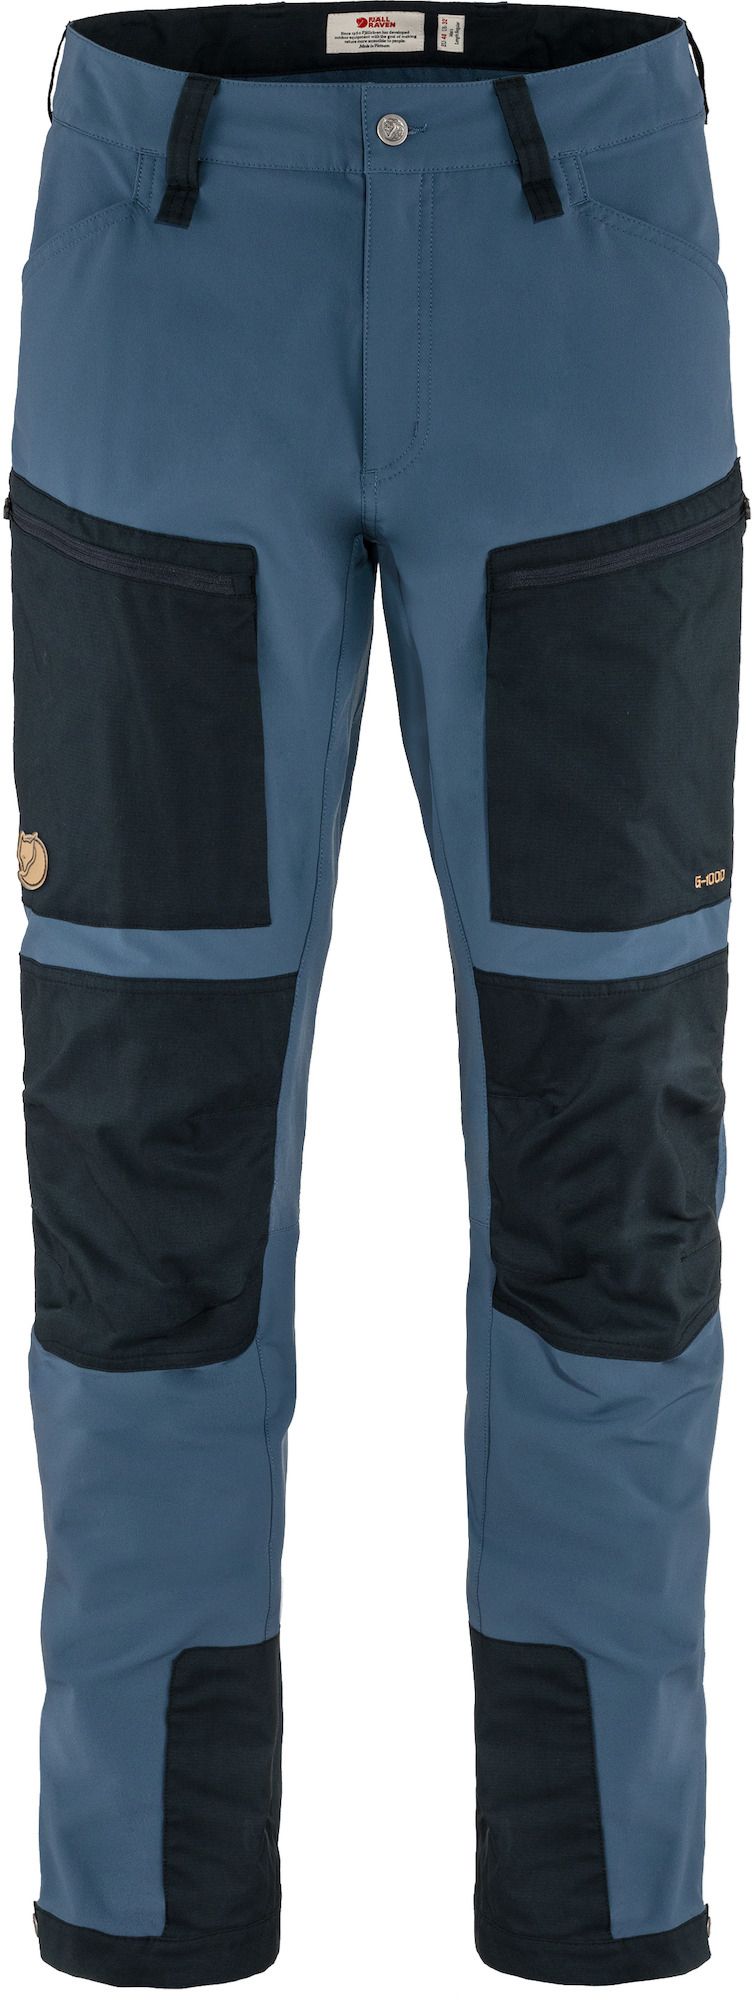 Photos - Ski Wear FjallRaven Men's Keb Agile Trouser, Size 37, Indigo Blue/Dark Navy 23KCZMK 